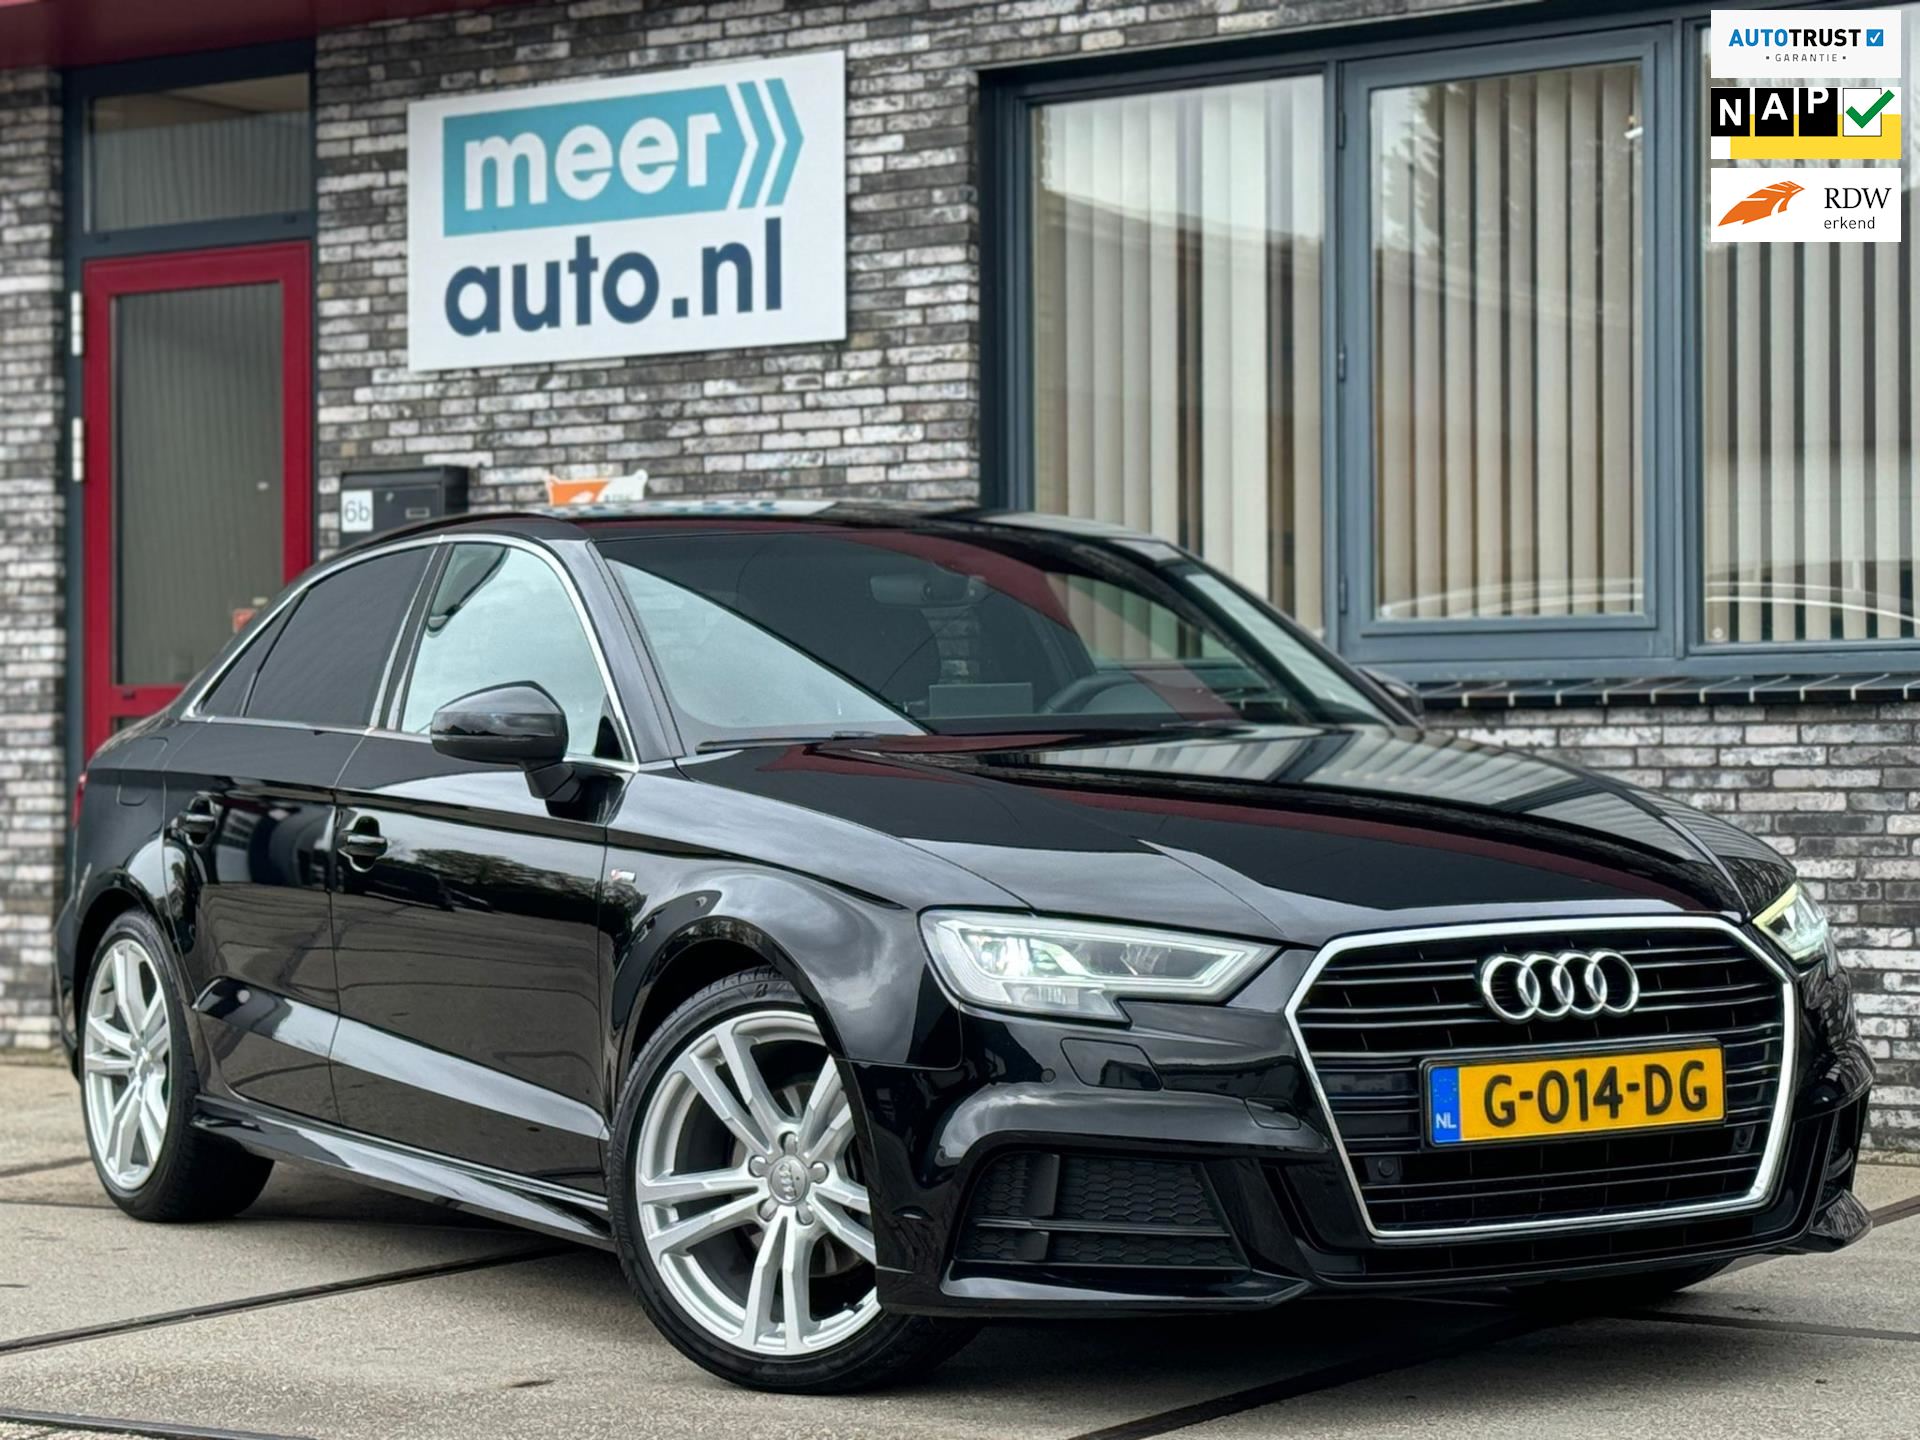 Audi A3 Limousine occasion - Meerauto.nl